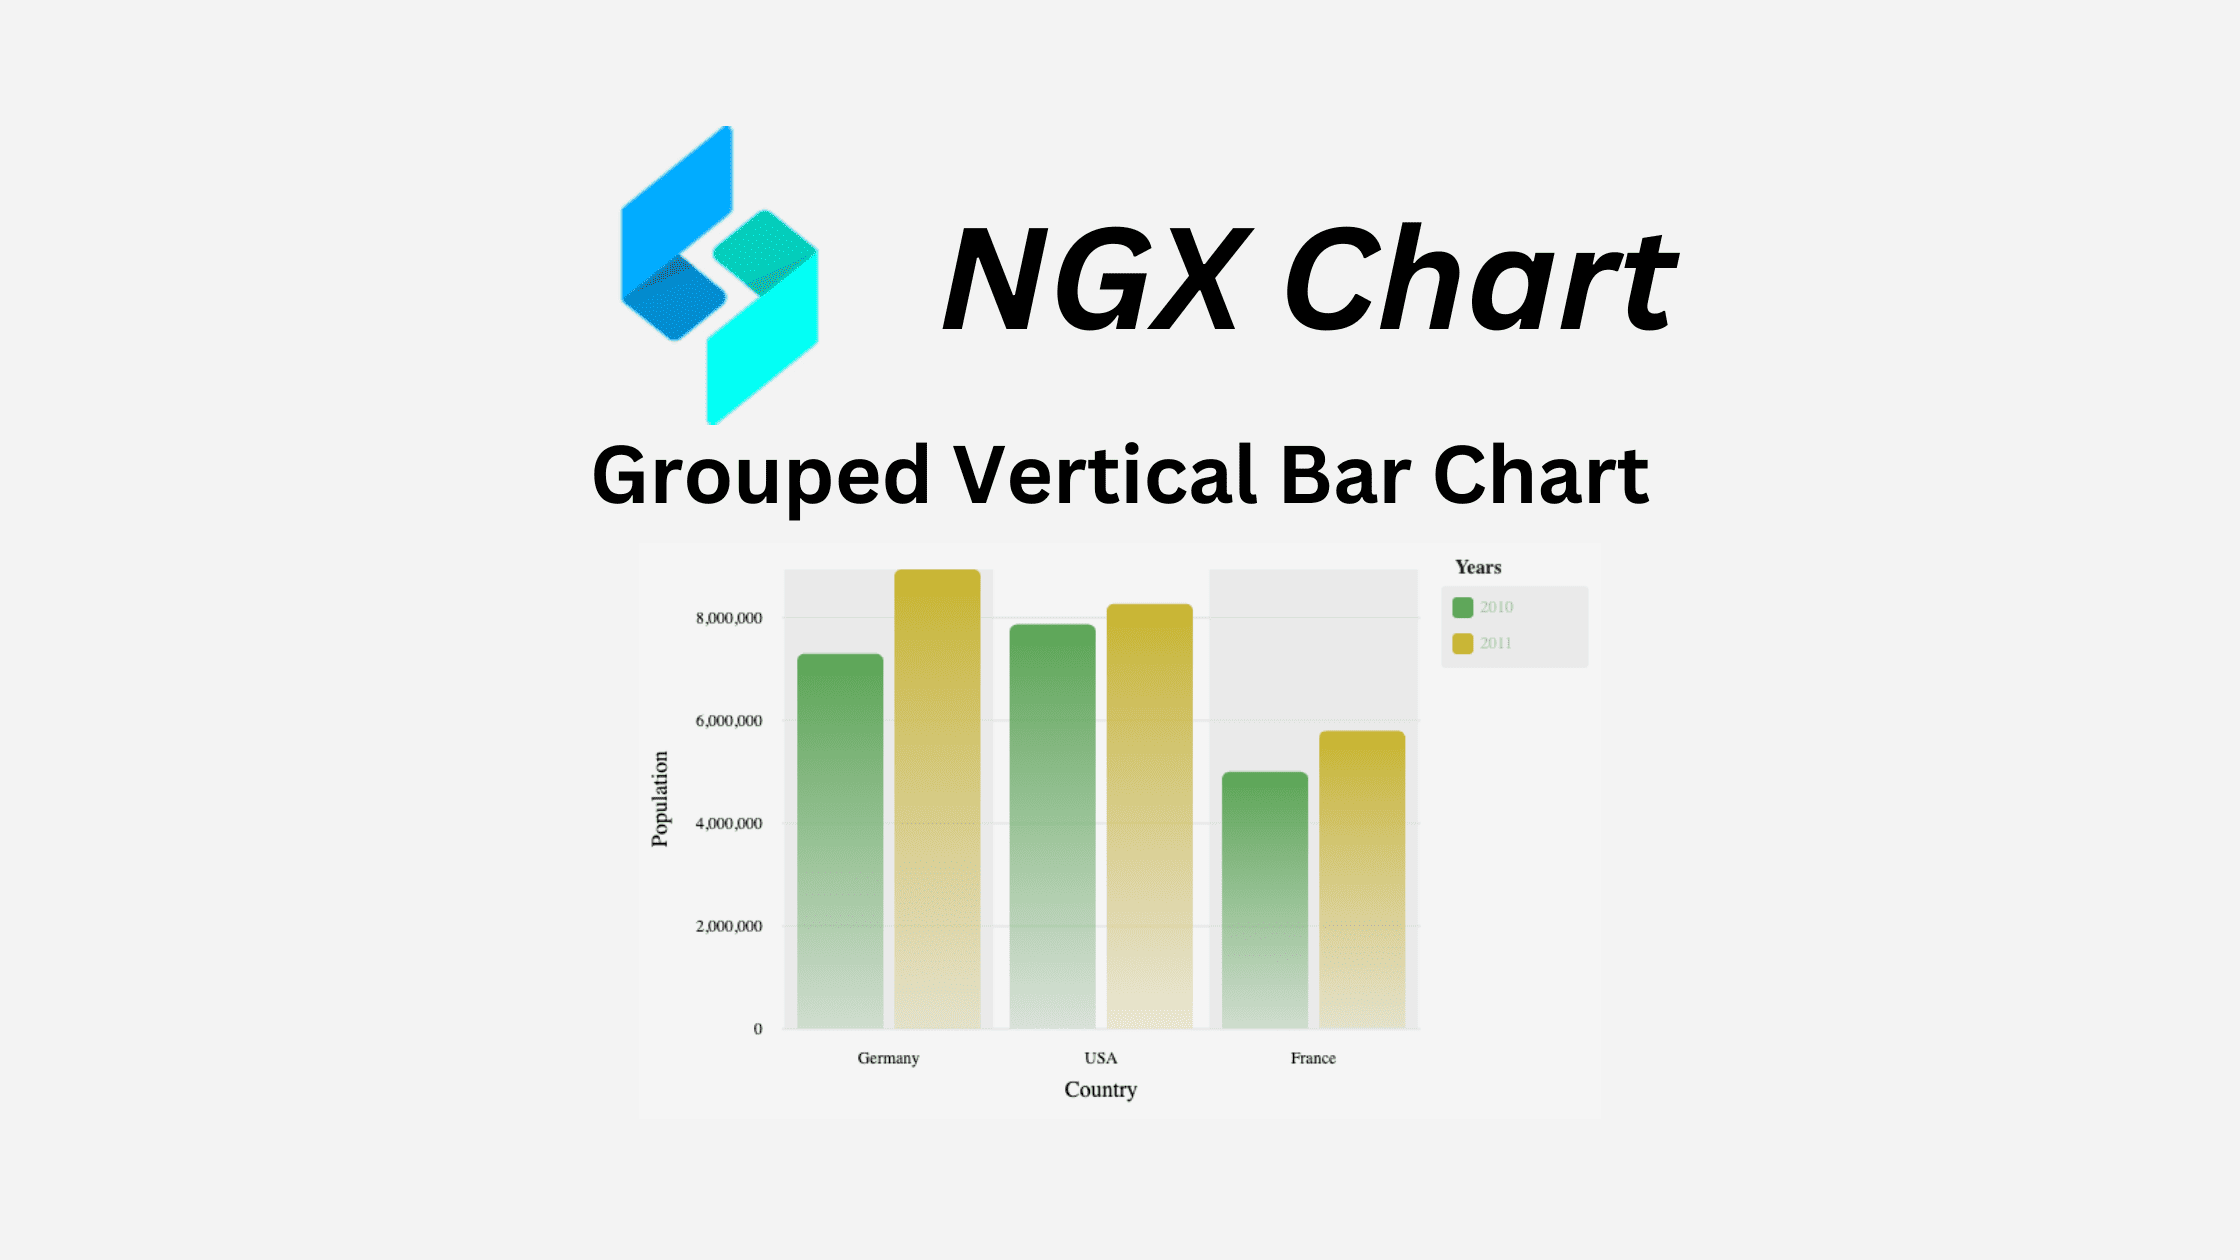 NGX Charts Grouped Vertical Bar Chart